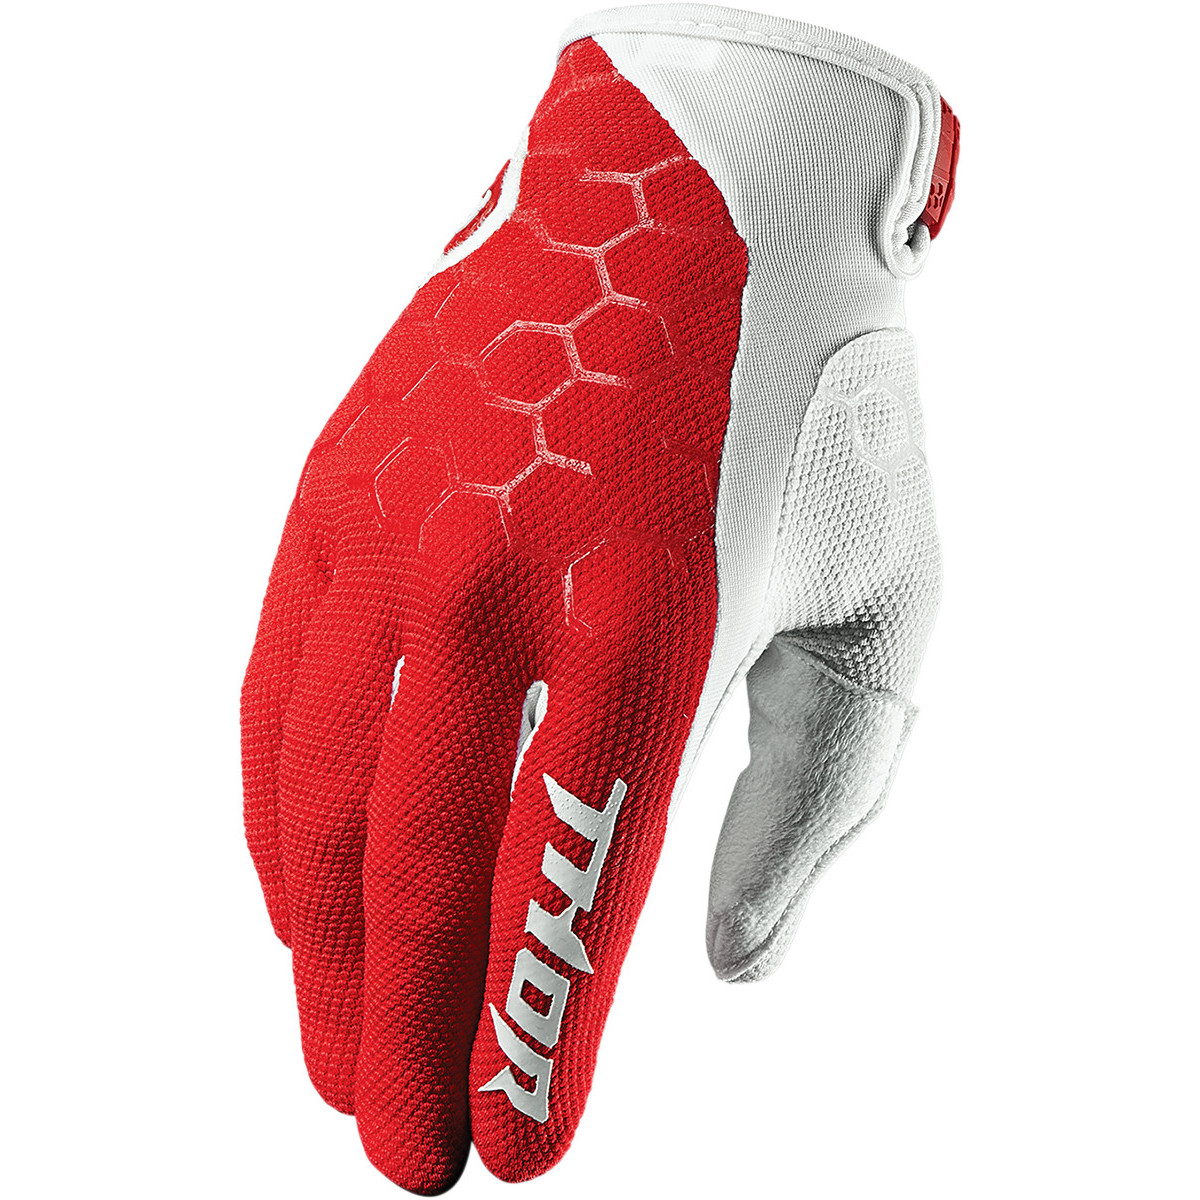 Thor Handschuhe Draft Indi - Rot/Weiß